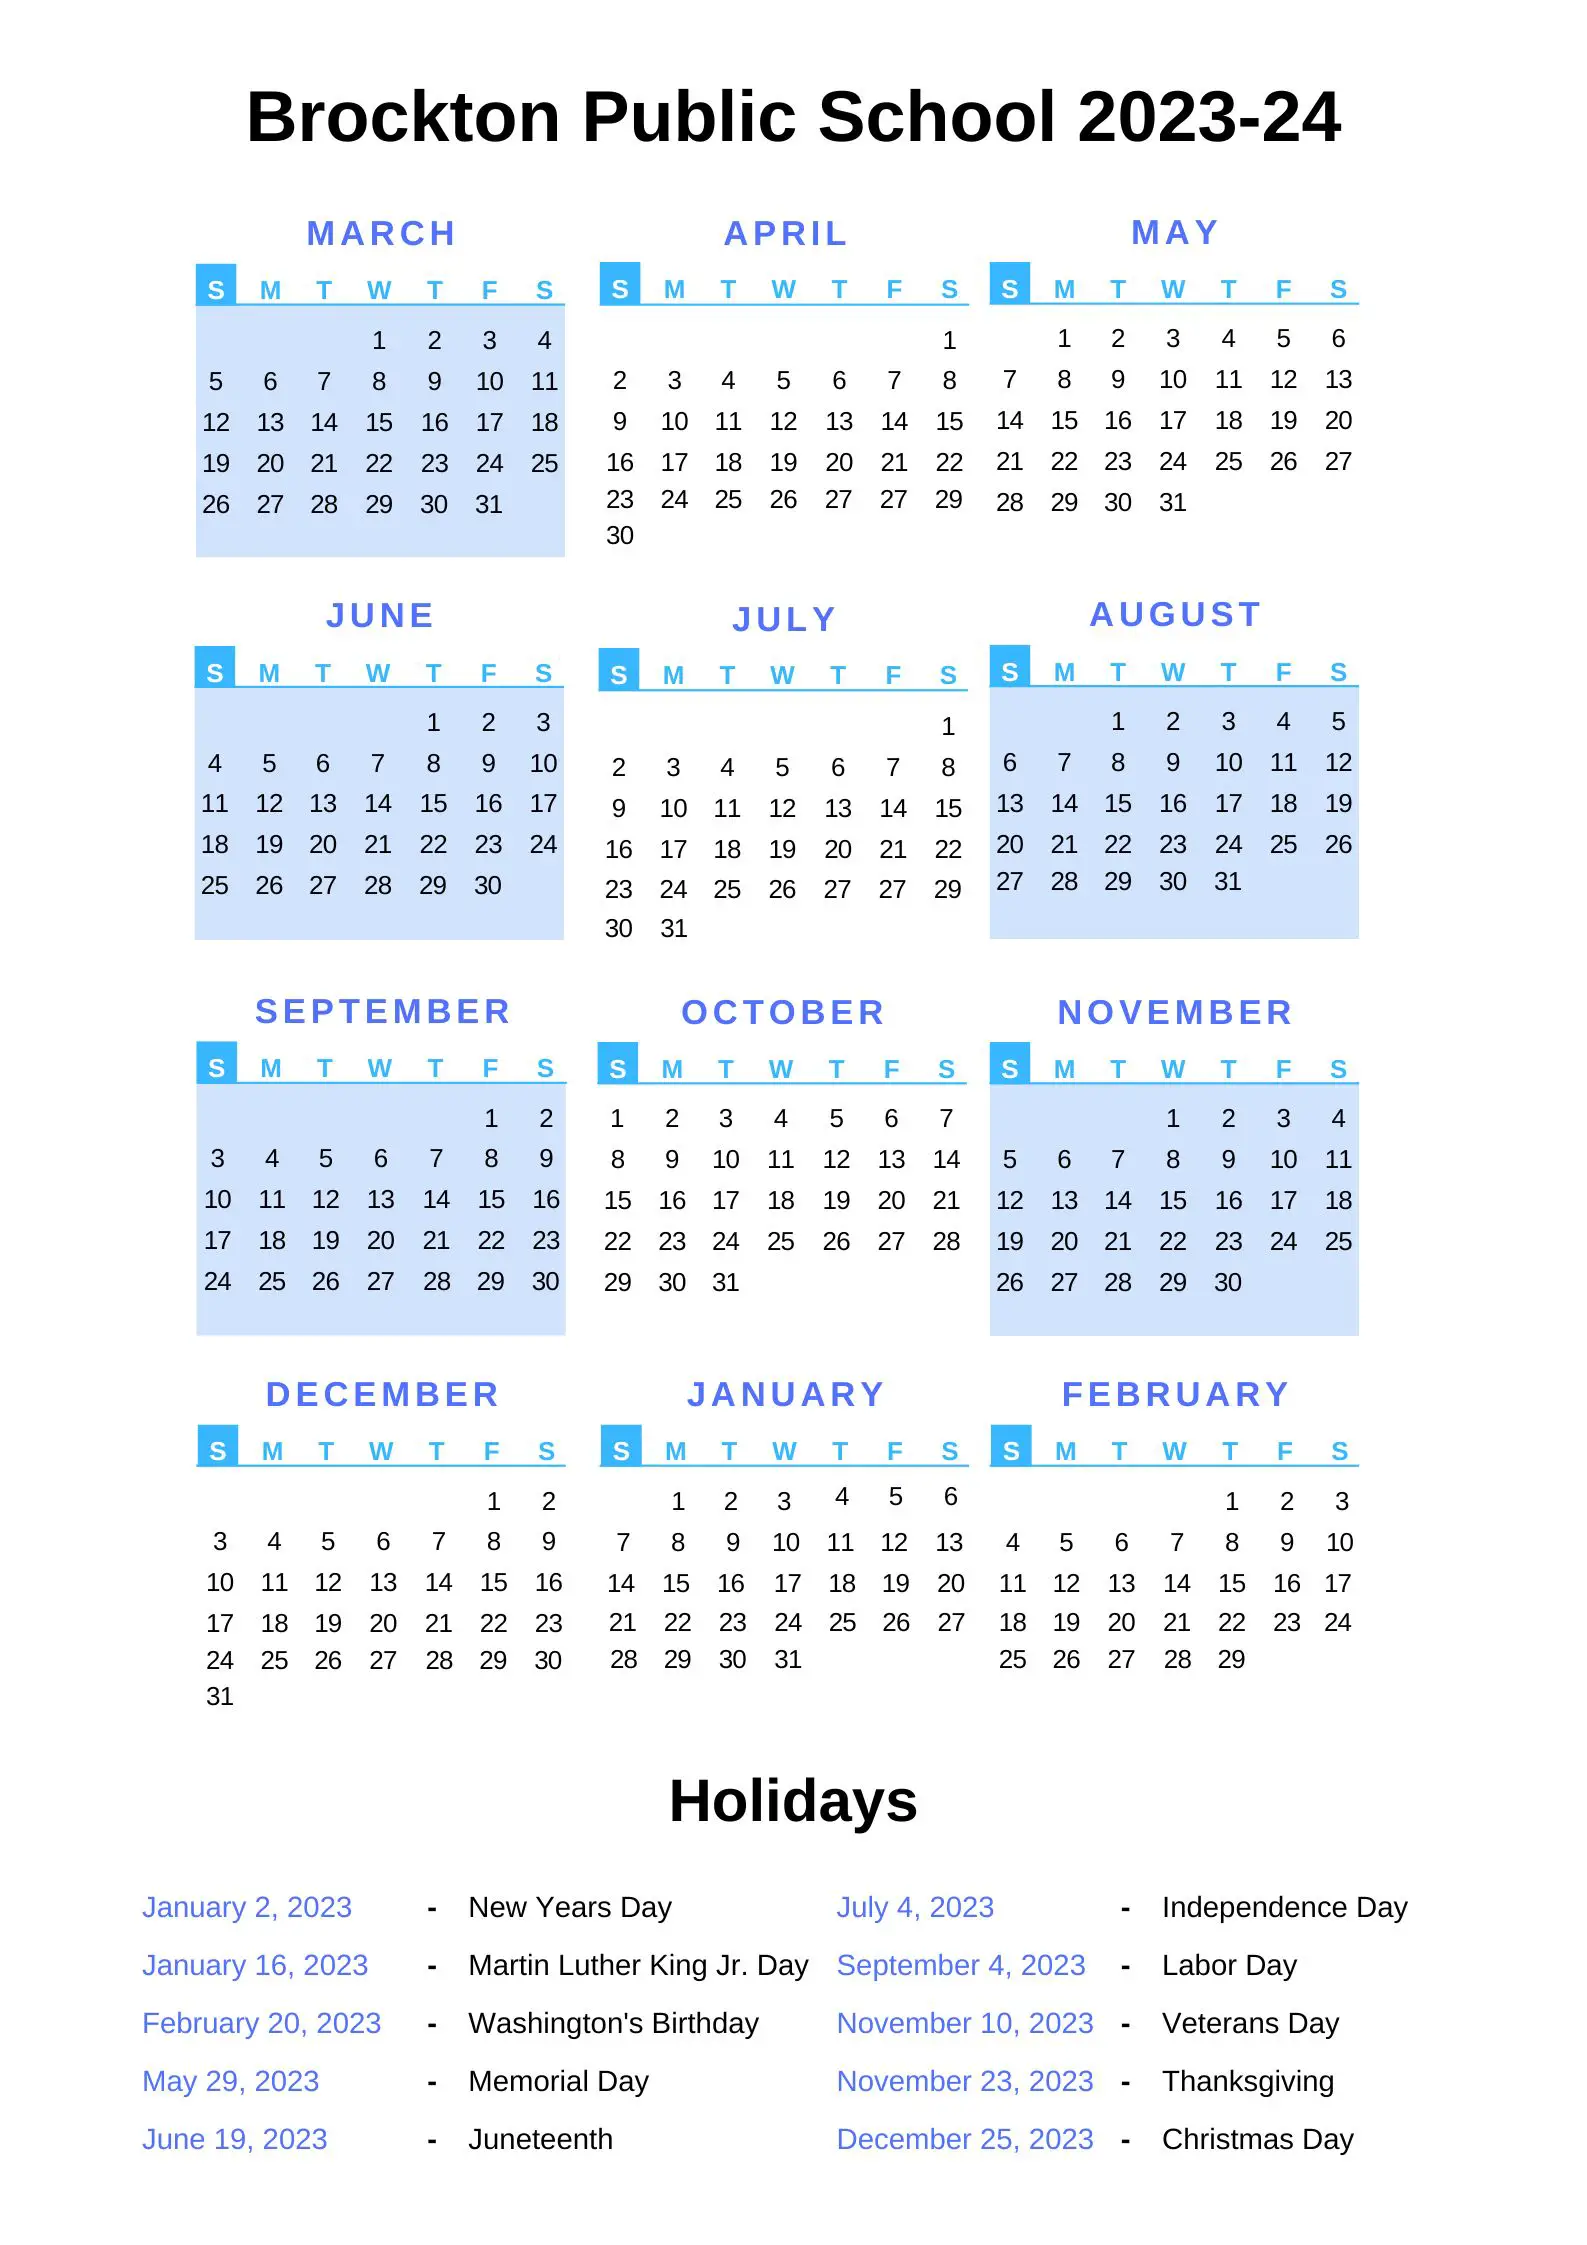 brockton-public-schools-calendar-2023-24-with-holidays